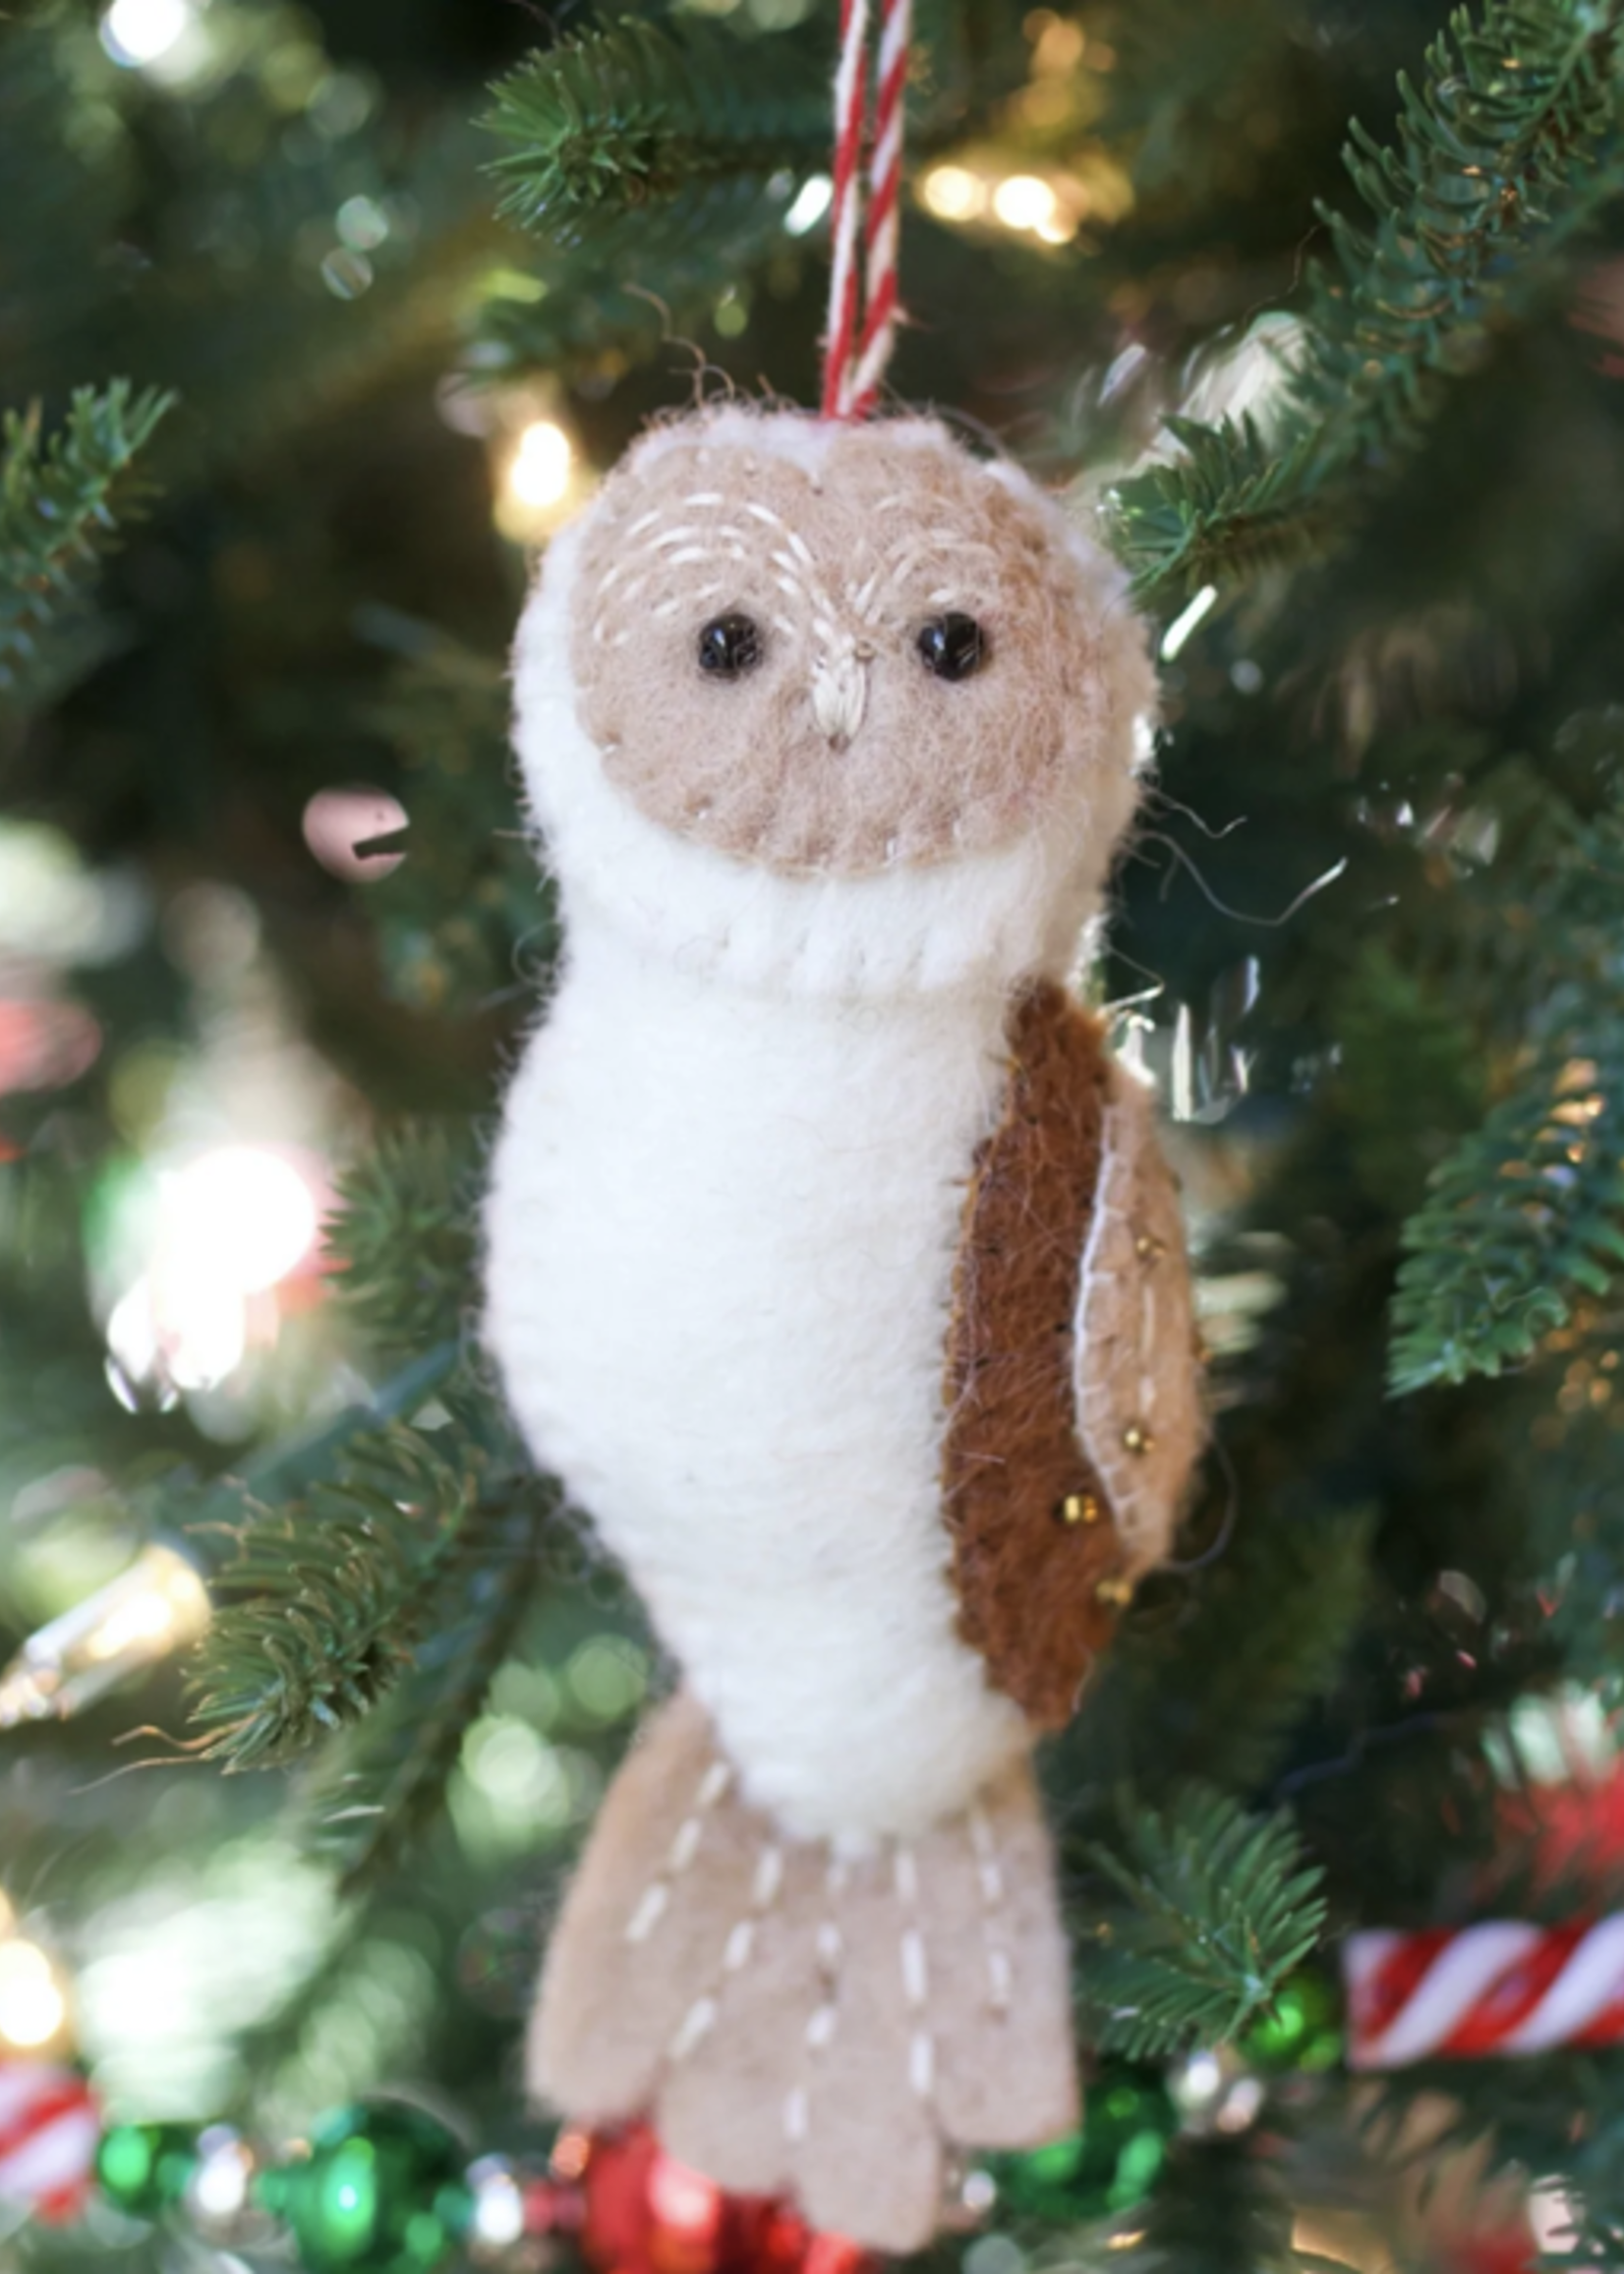 Owl Felt Wool Ornament